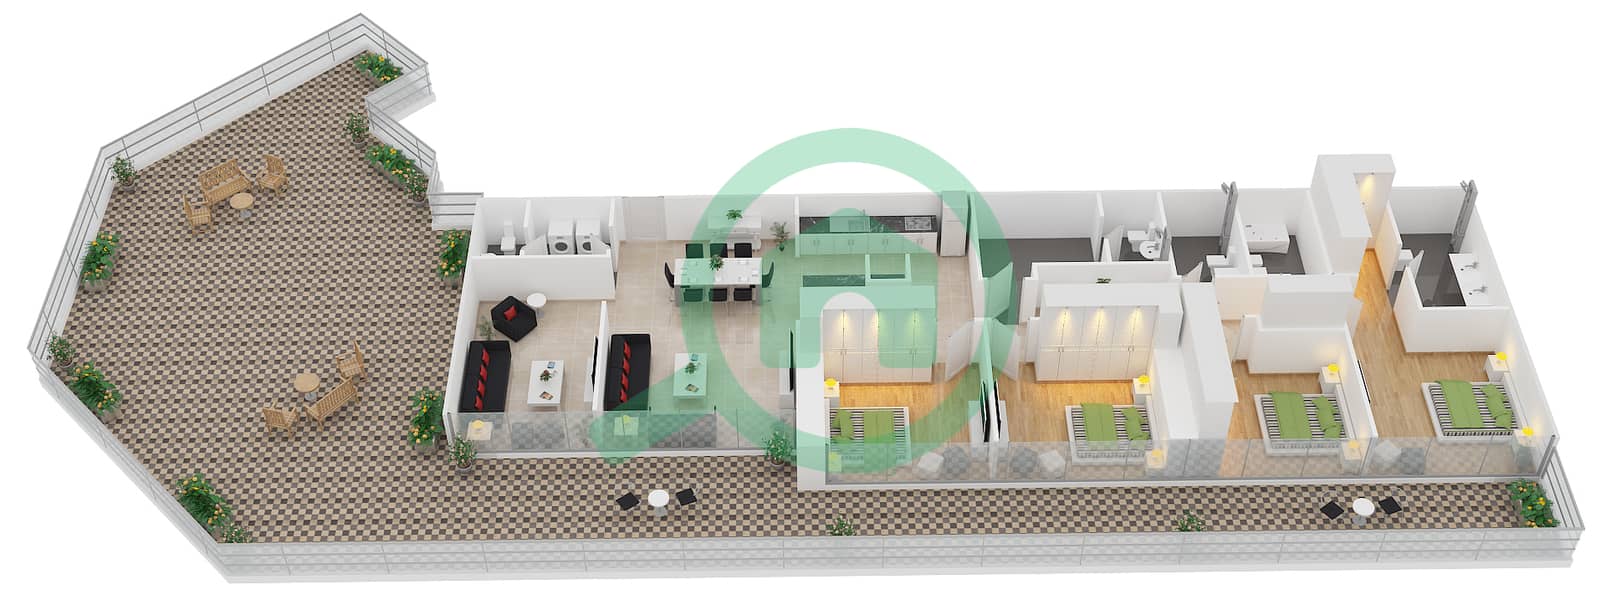 Зайя Хамени - Апартамент 4 Cпальни планировка Тип E1 interactive3D